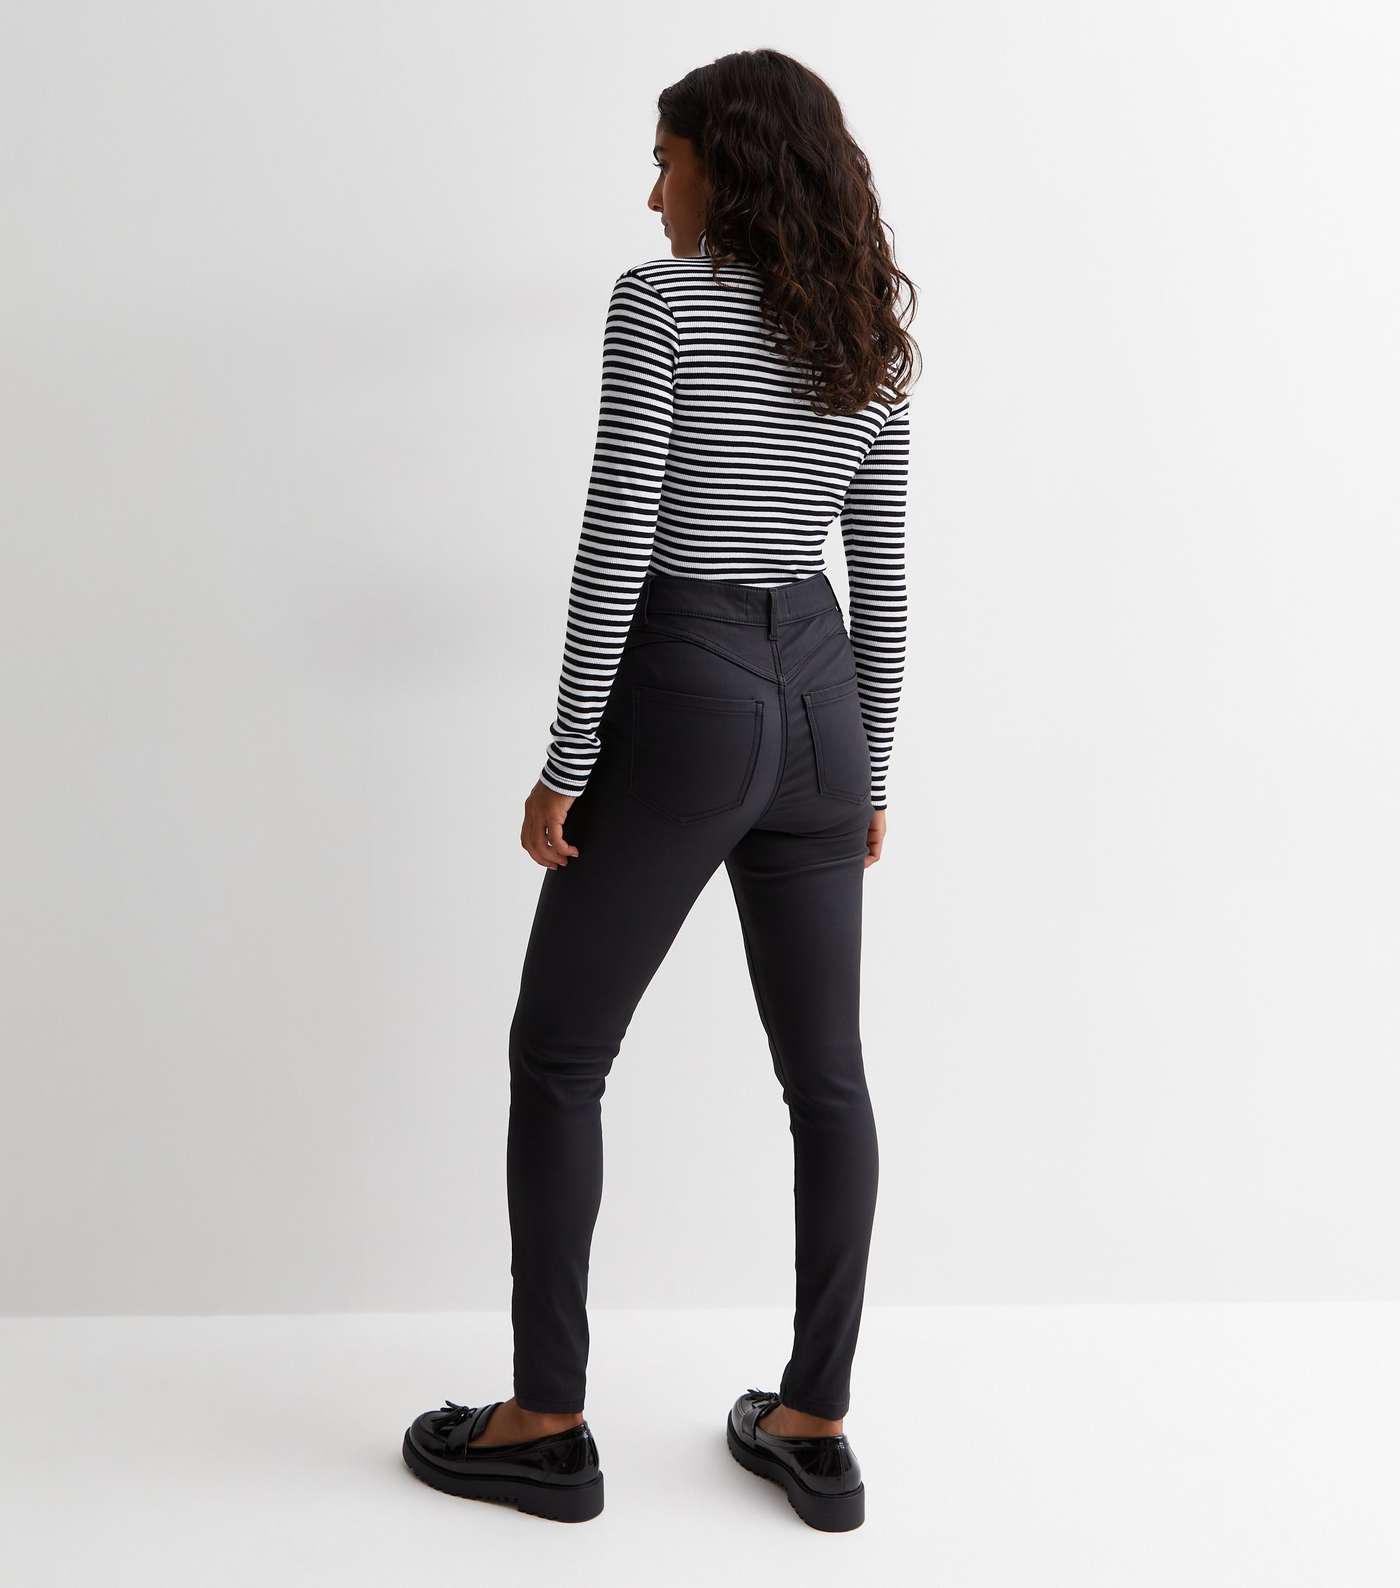 Petite Black Coated Leather-Look Lift & Shape Jenna Skinny Jeans Image 4